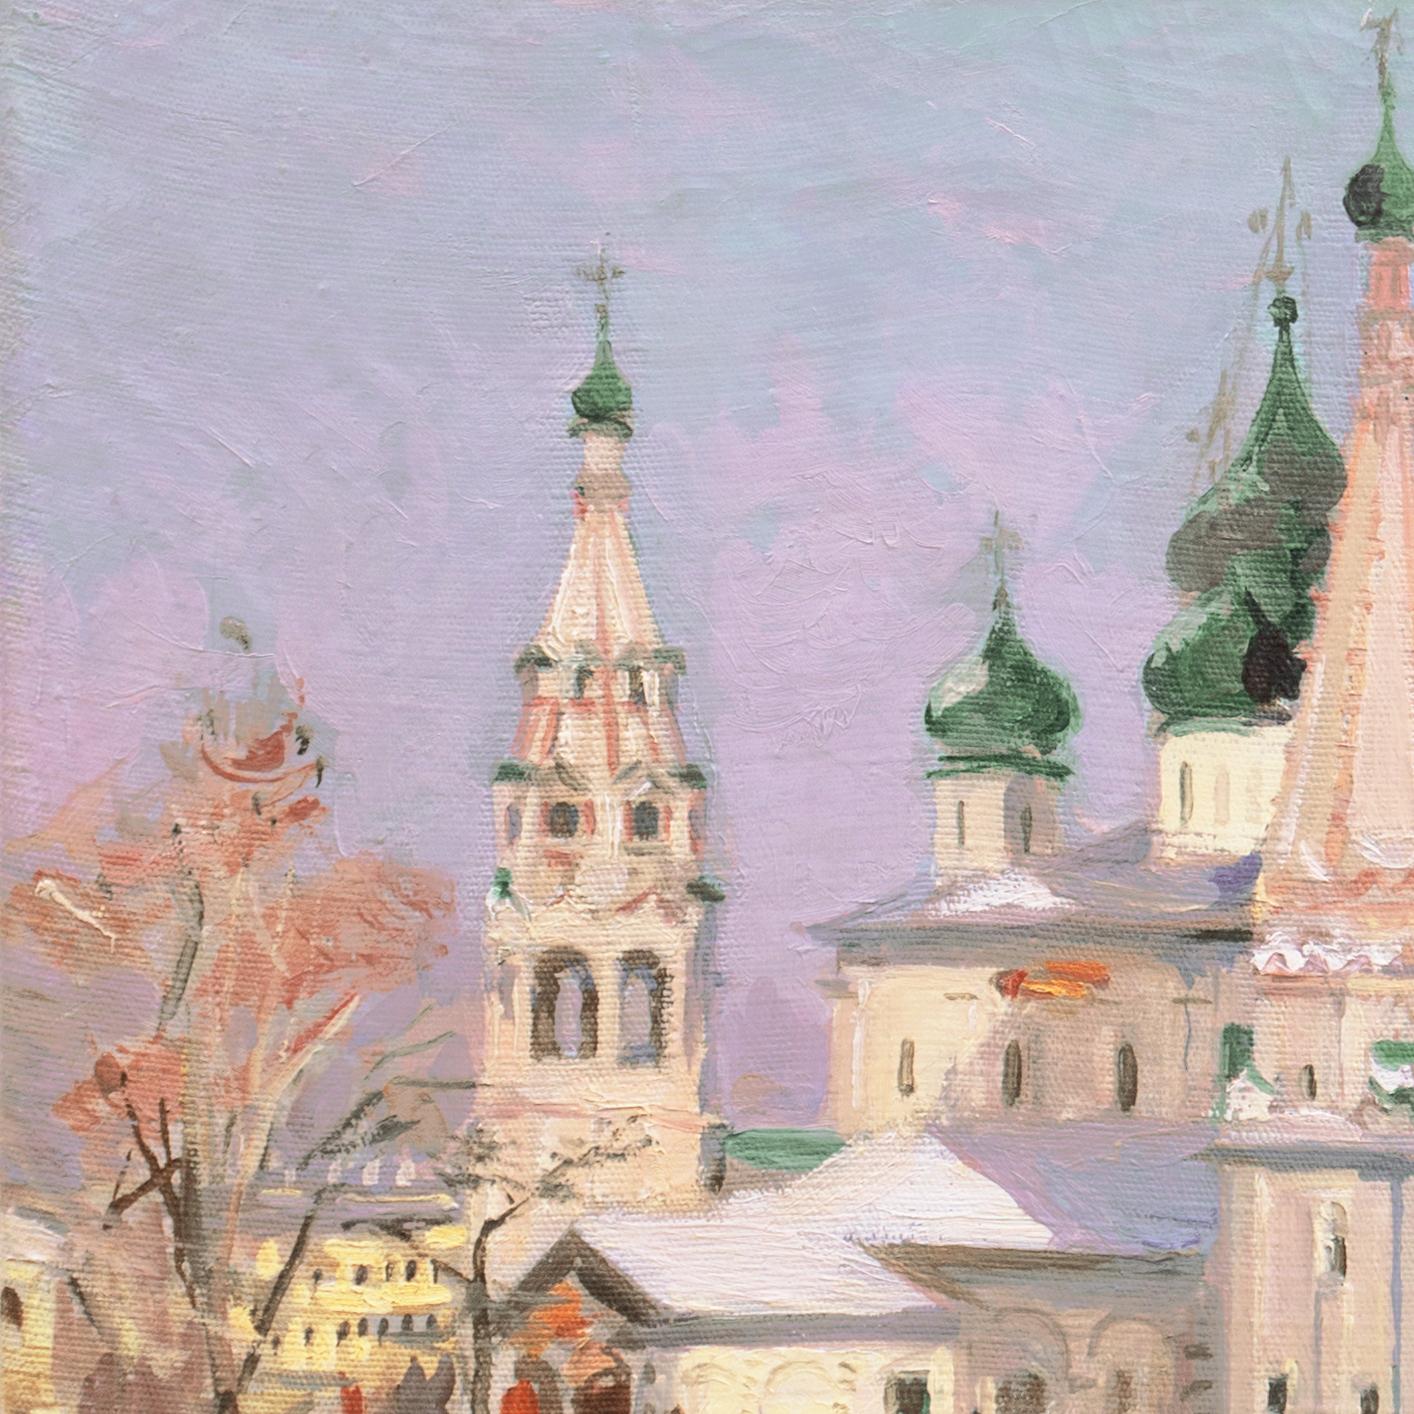  'Church of Elijah the Prophet, Yarolsavl City', Ilaskaya Church, Russia, Oil  - Beige Landscape Painting by Valentin Nikolaevich Leontiev